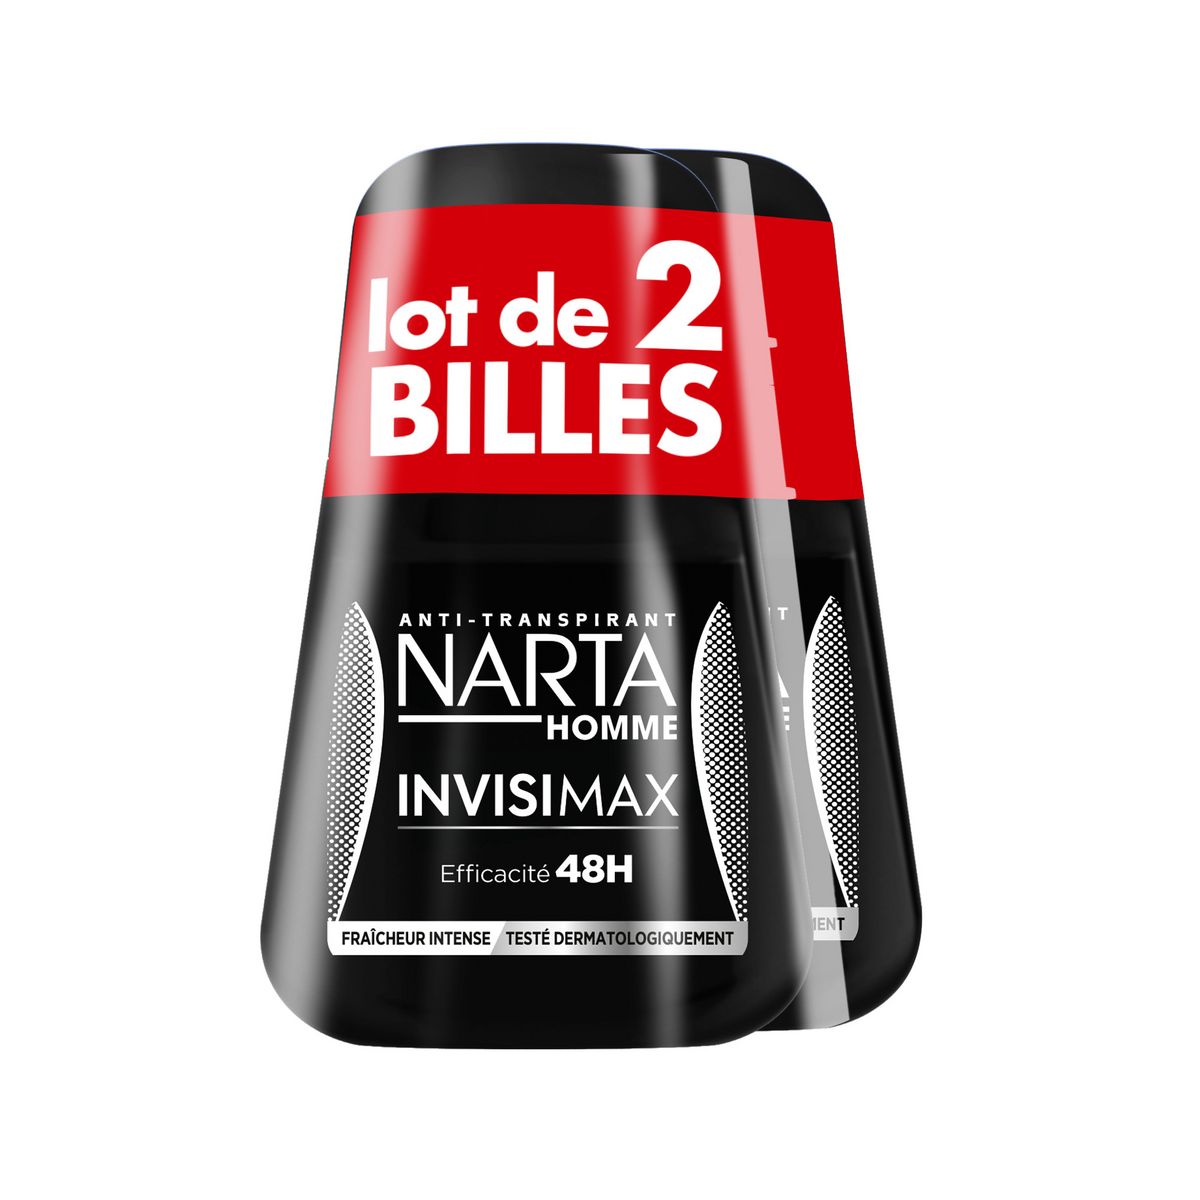 NARTA Invisimax Déodorant bille homme 48h fraicheur intense 2 pièces 2x50ml